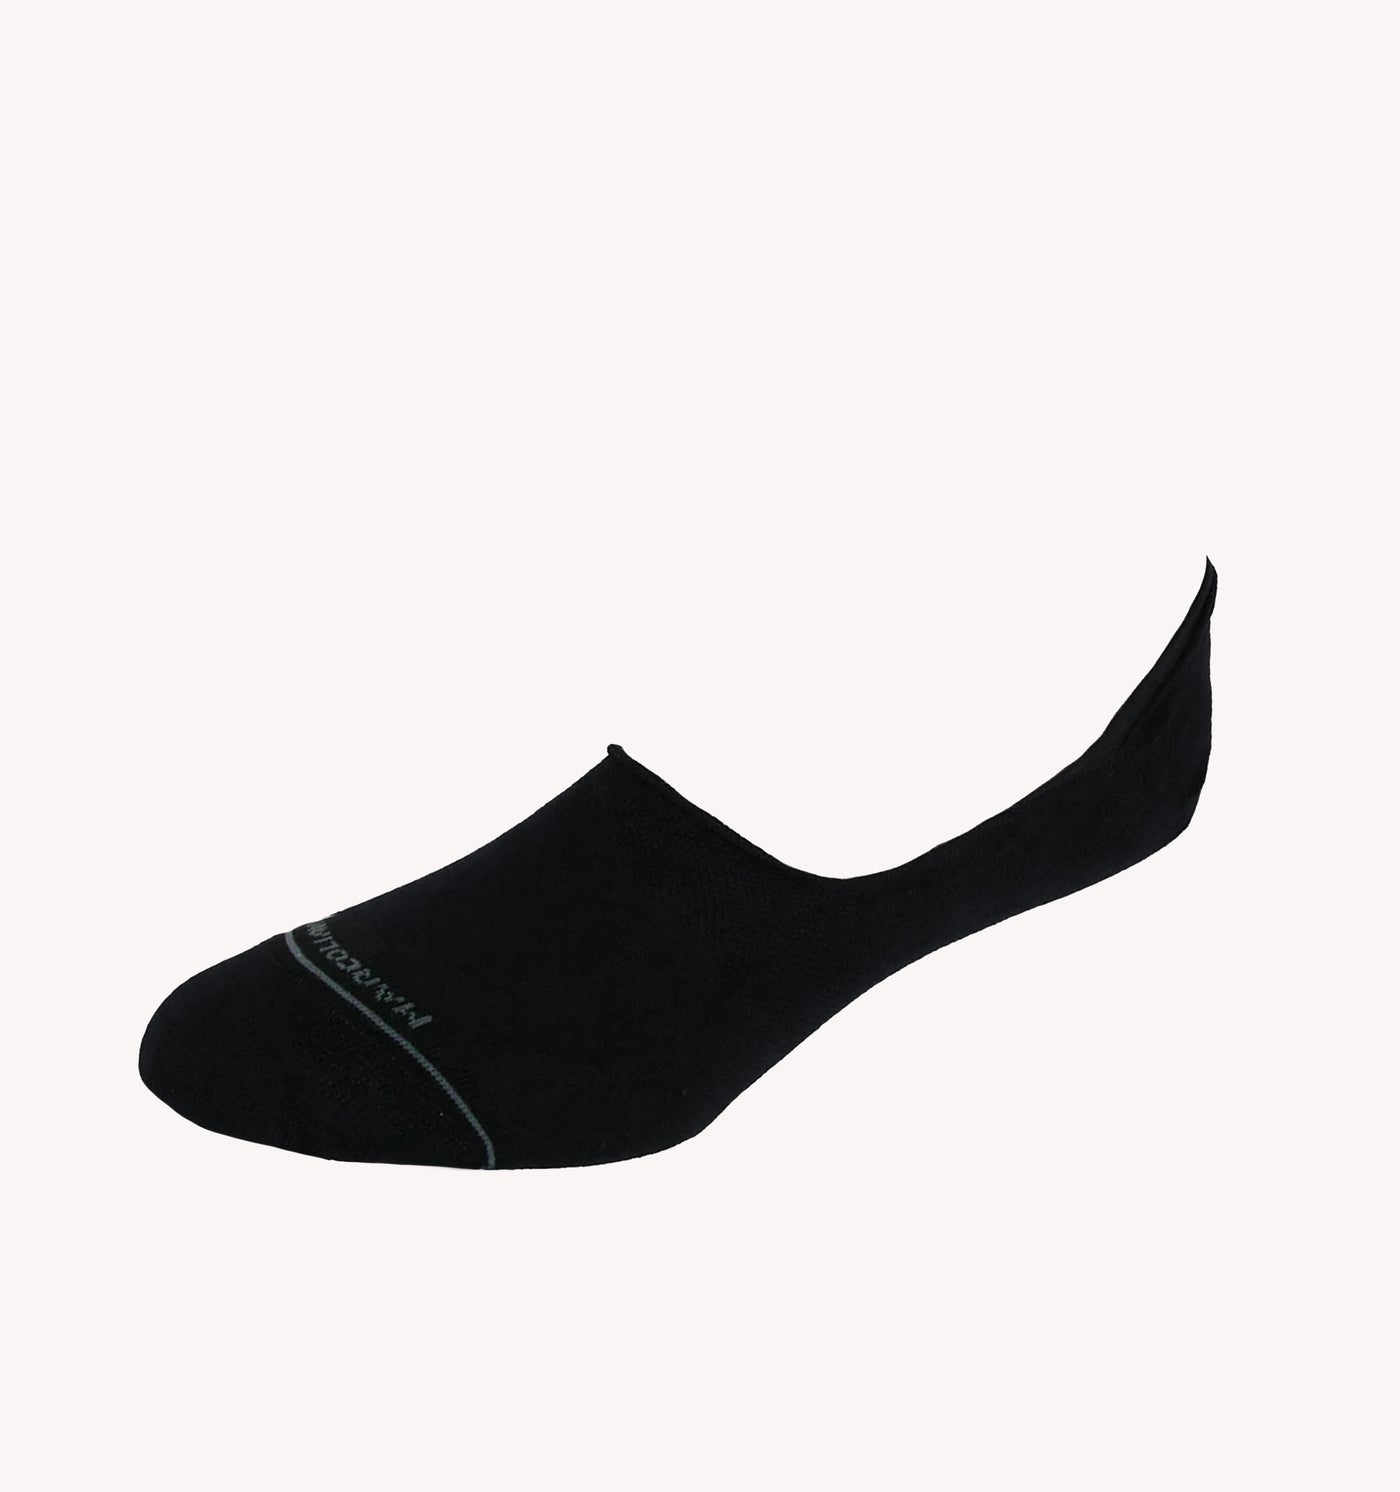 Marcoliani Milano No-Show Socks in Black